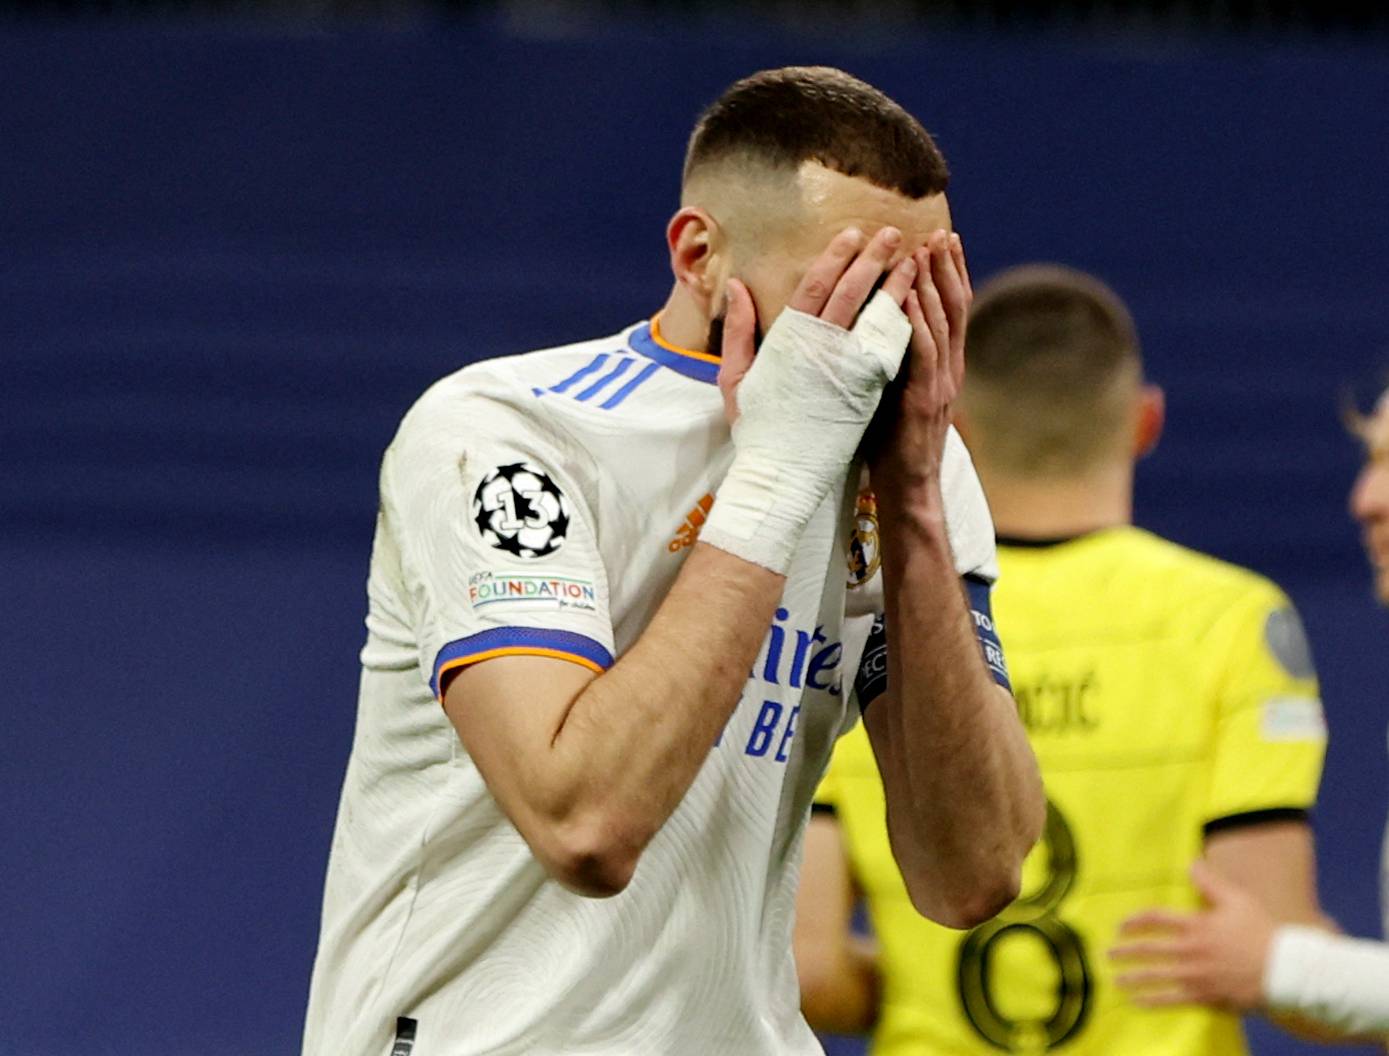 Champions League - Quarter Final - Second Leg - Real Madrid v Chelsea